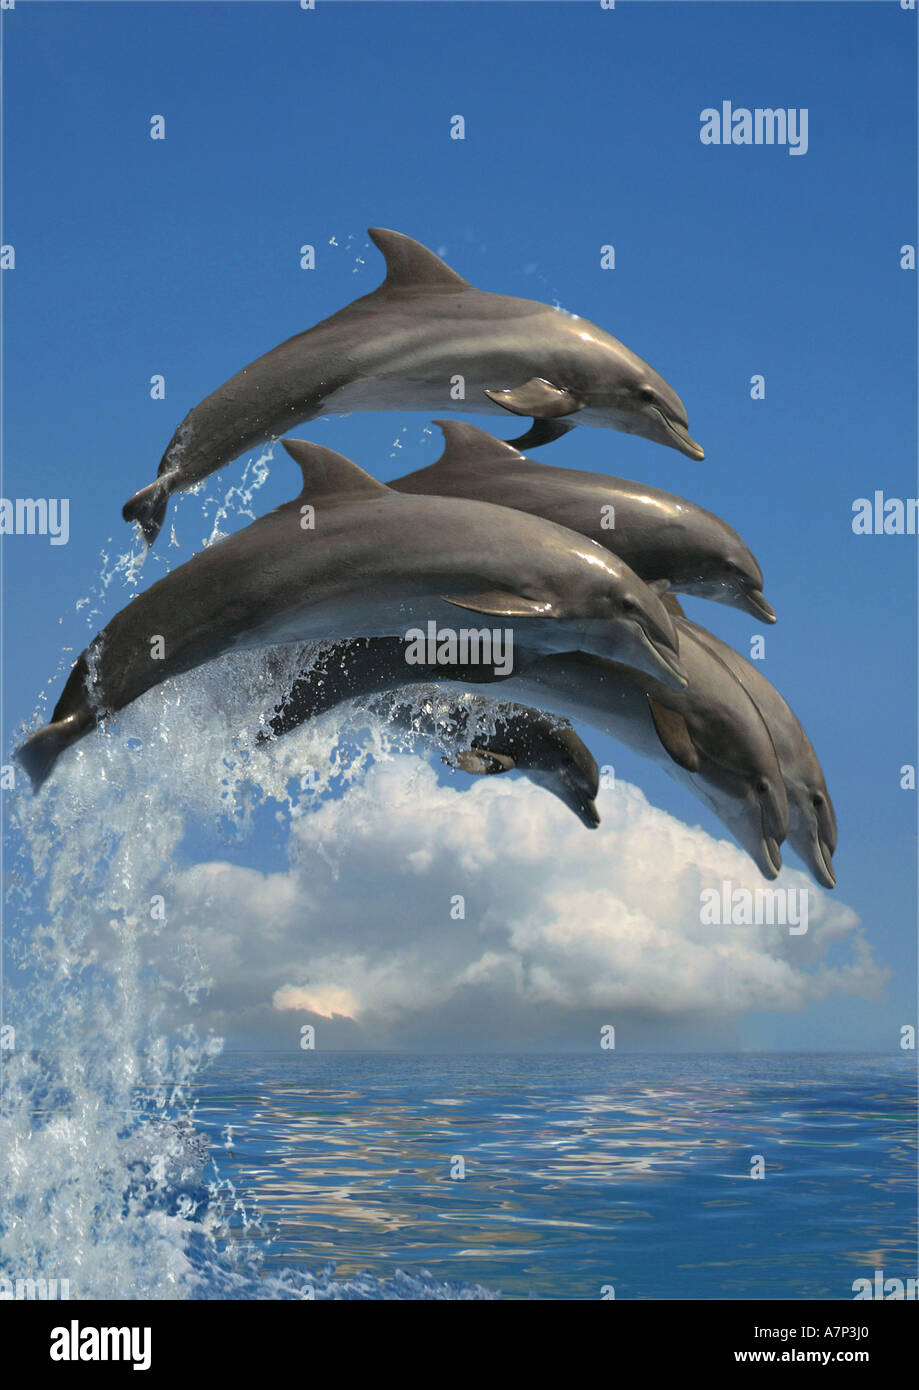 Bottlenosed dolphin, comune bottiglia di delfini dal naso (Tursiops truncatus), saltando in midair Foto Stock